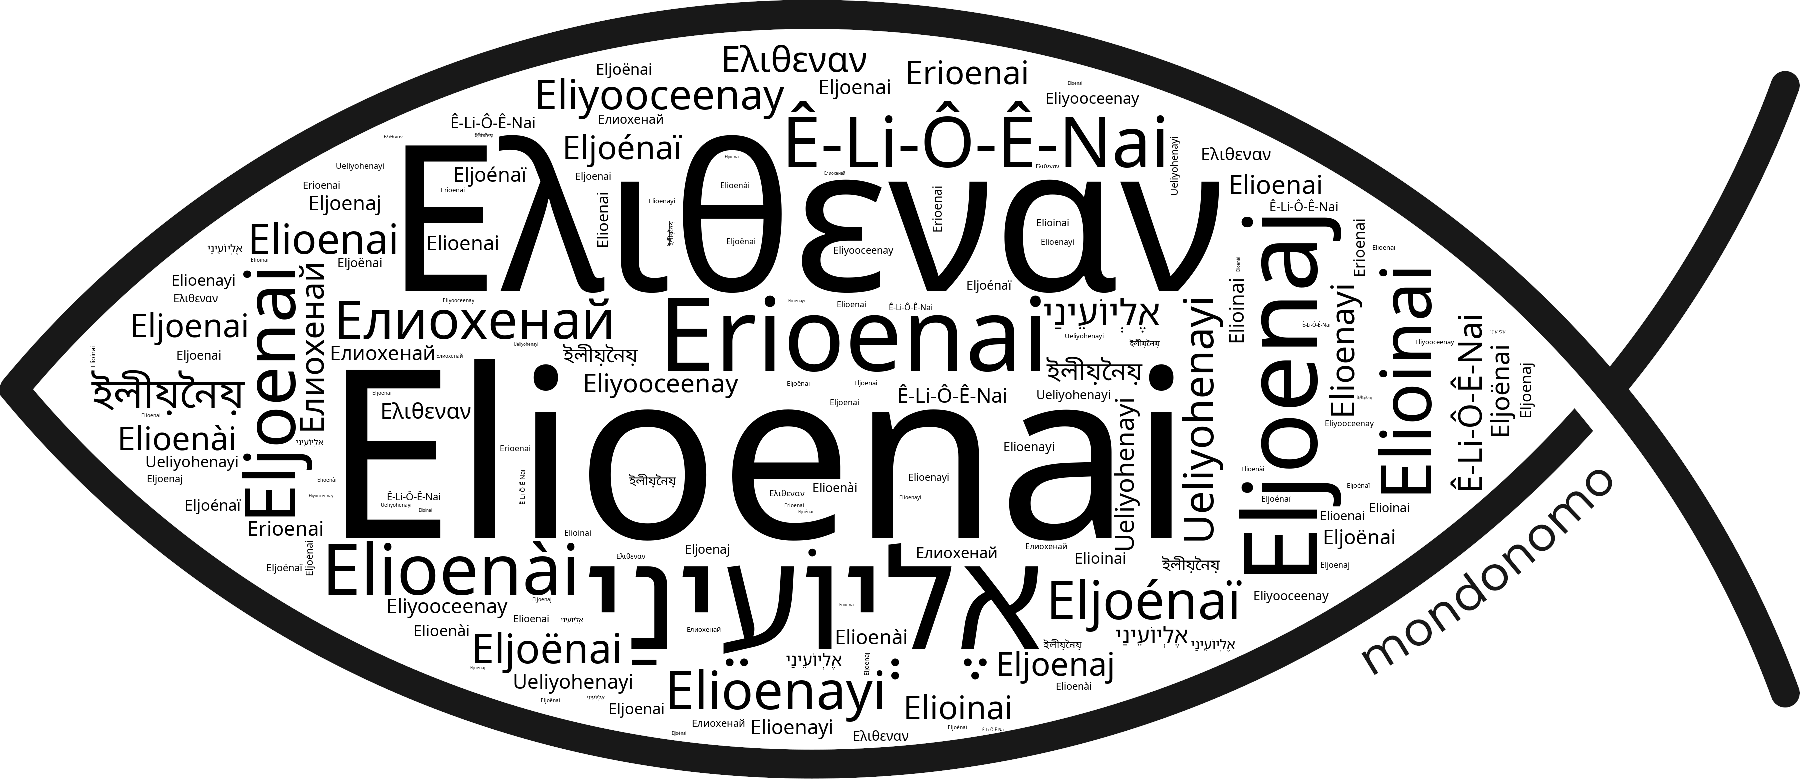 Name Elioenai in the world's Bibles